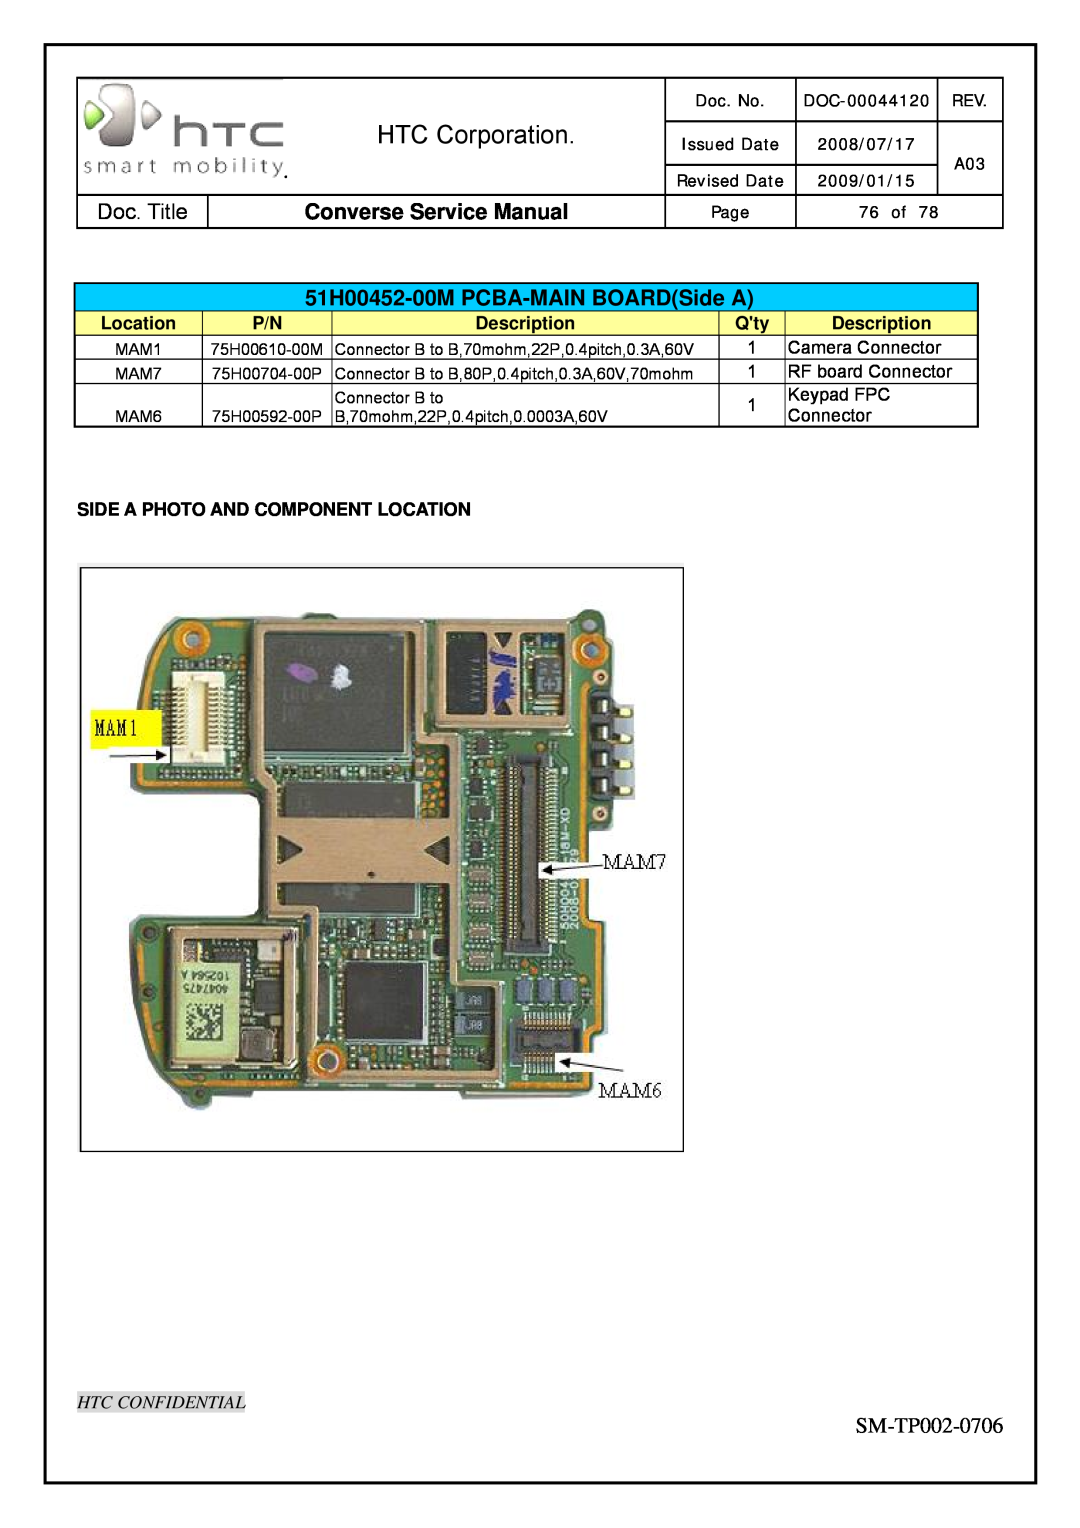 HTC SM-TP002-0706 51H00452-00M PCBA-MAIN BOARDSide A, HTC Corporation, Converse Service Manual, Location, Description 